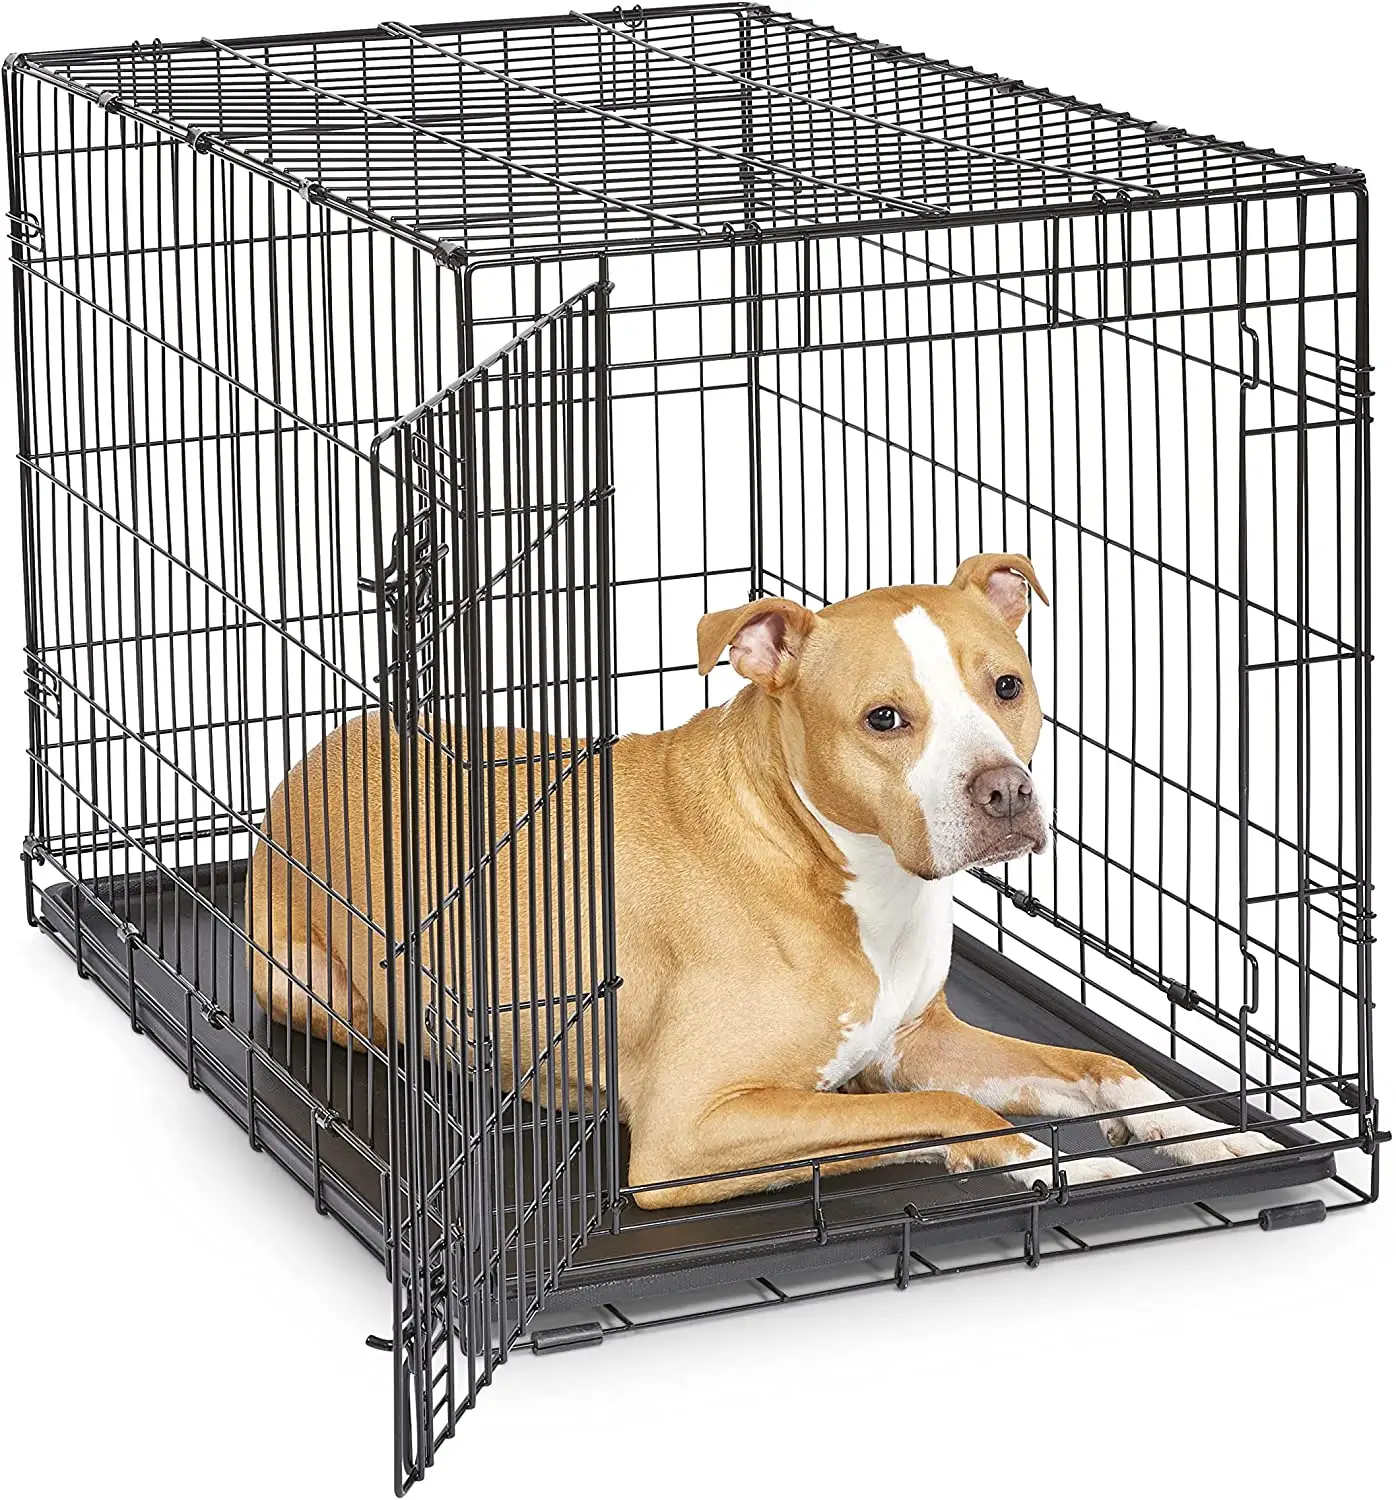 XS مقاس معدني قابل للطي ، بيوت الكلاب في غرفة النوم ، قفص الكلاب مع صينية بلاستيكية متينة من الفولاذ المقاوم للصدأ